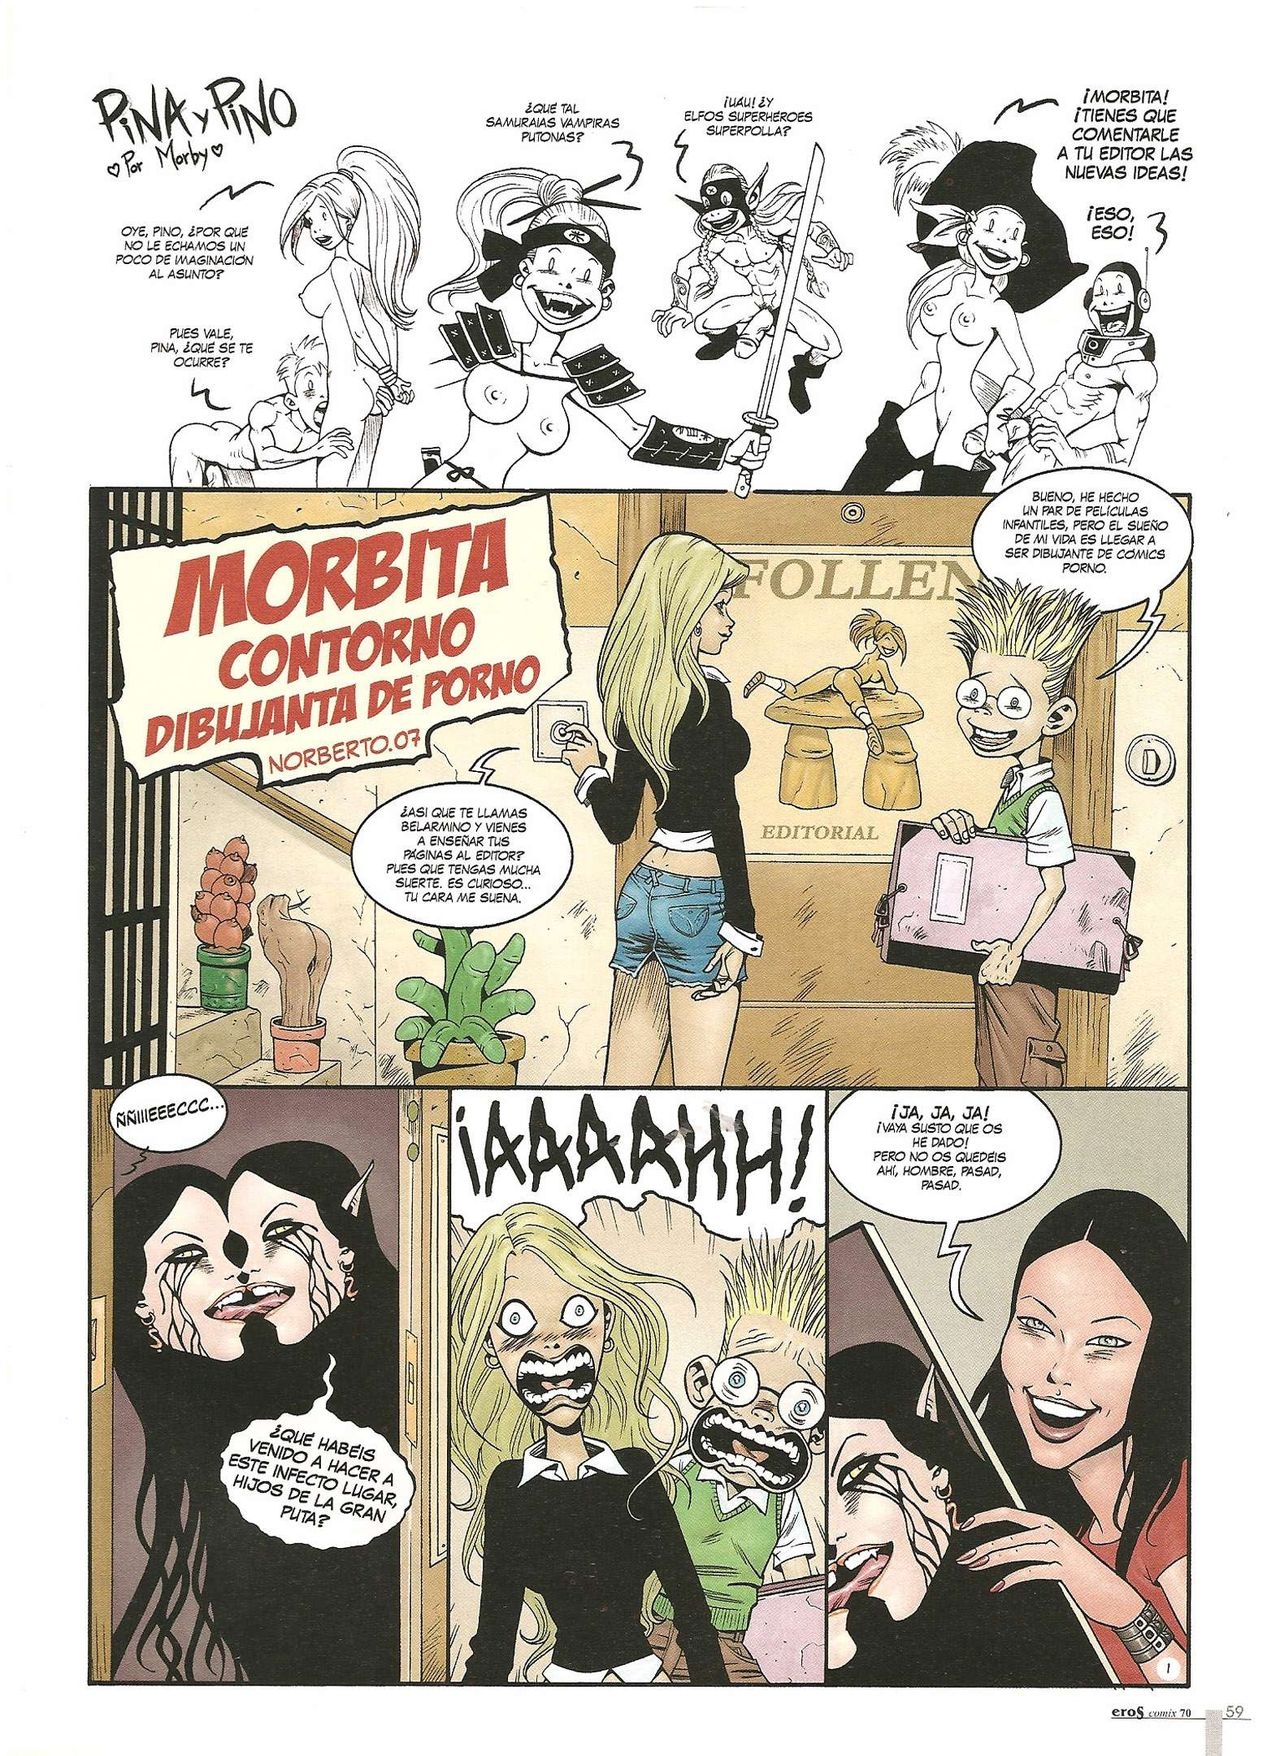 [Norberto Fernández] Morbita Contorno, dibujanta de porno [Spanish] 23